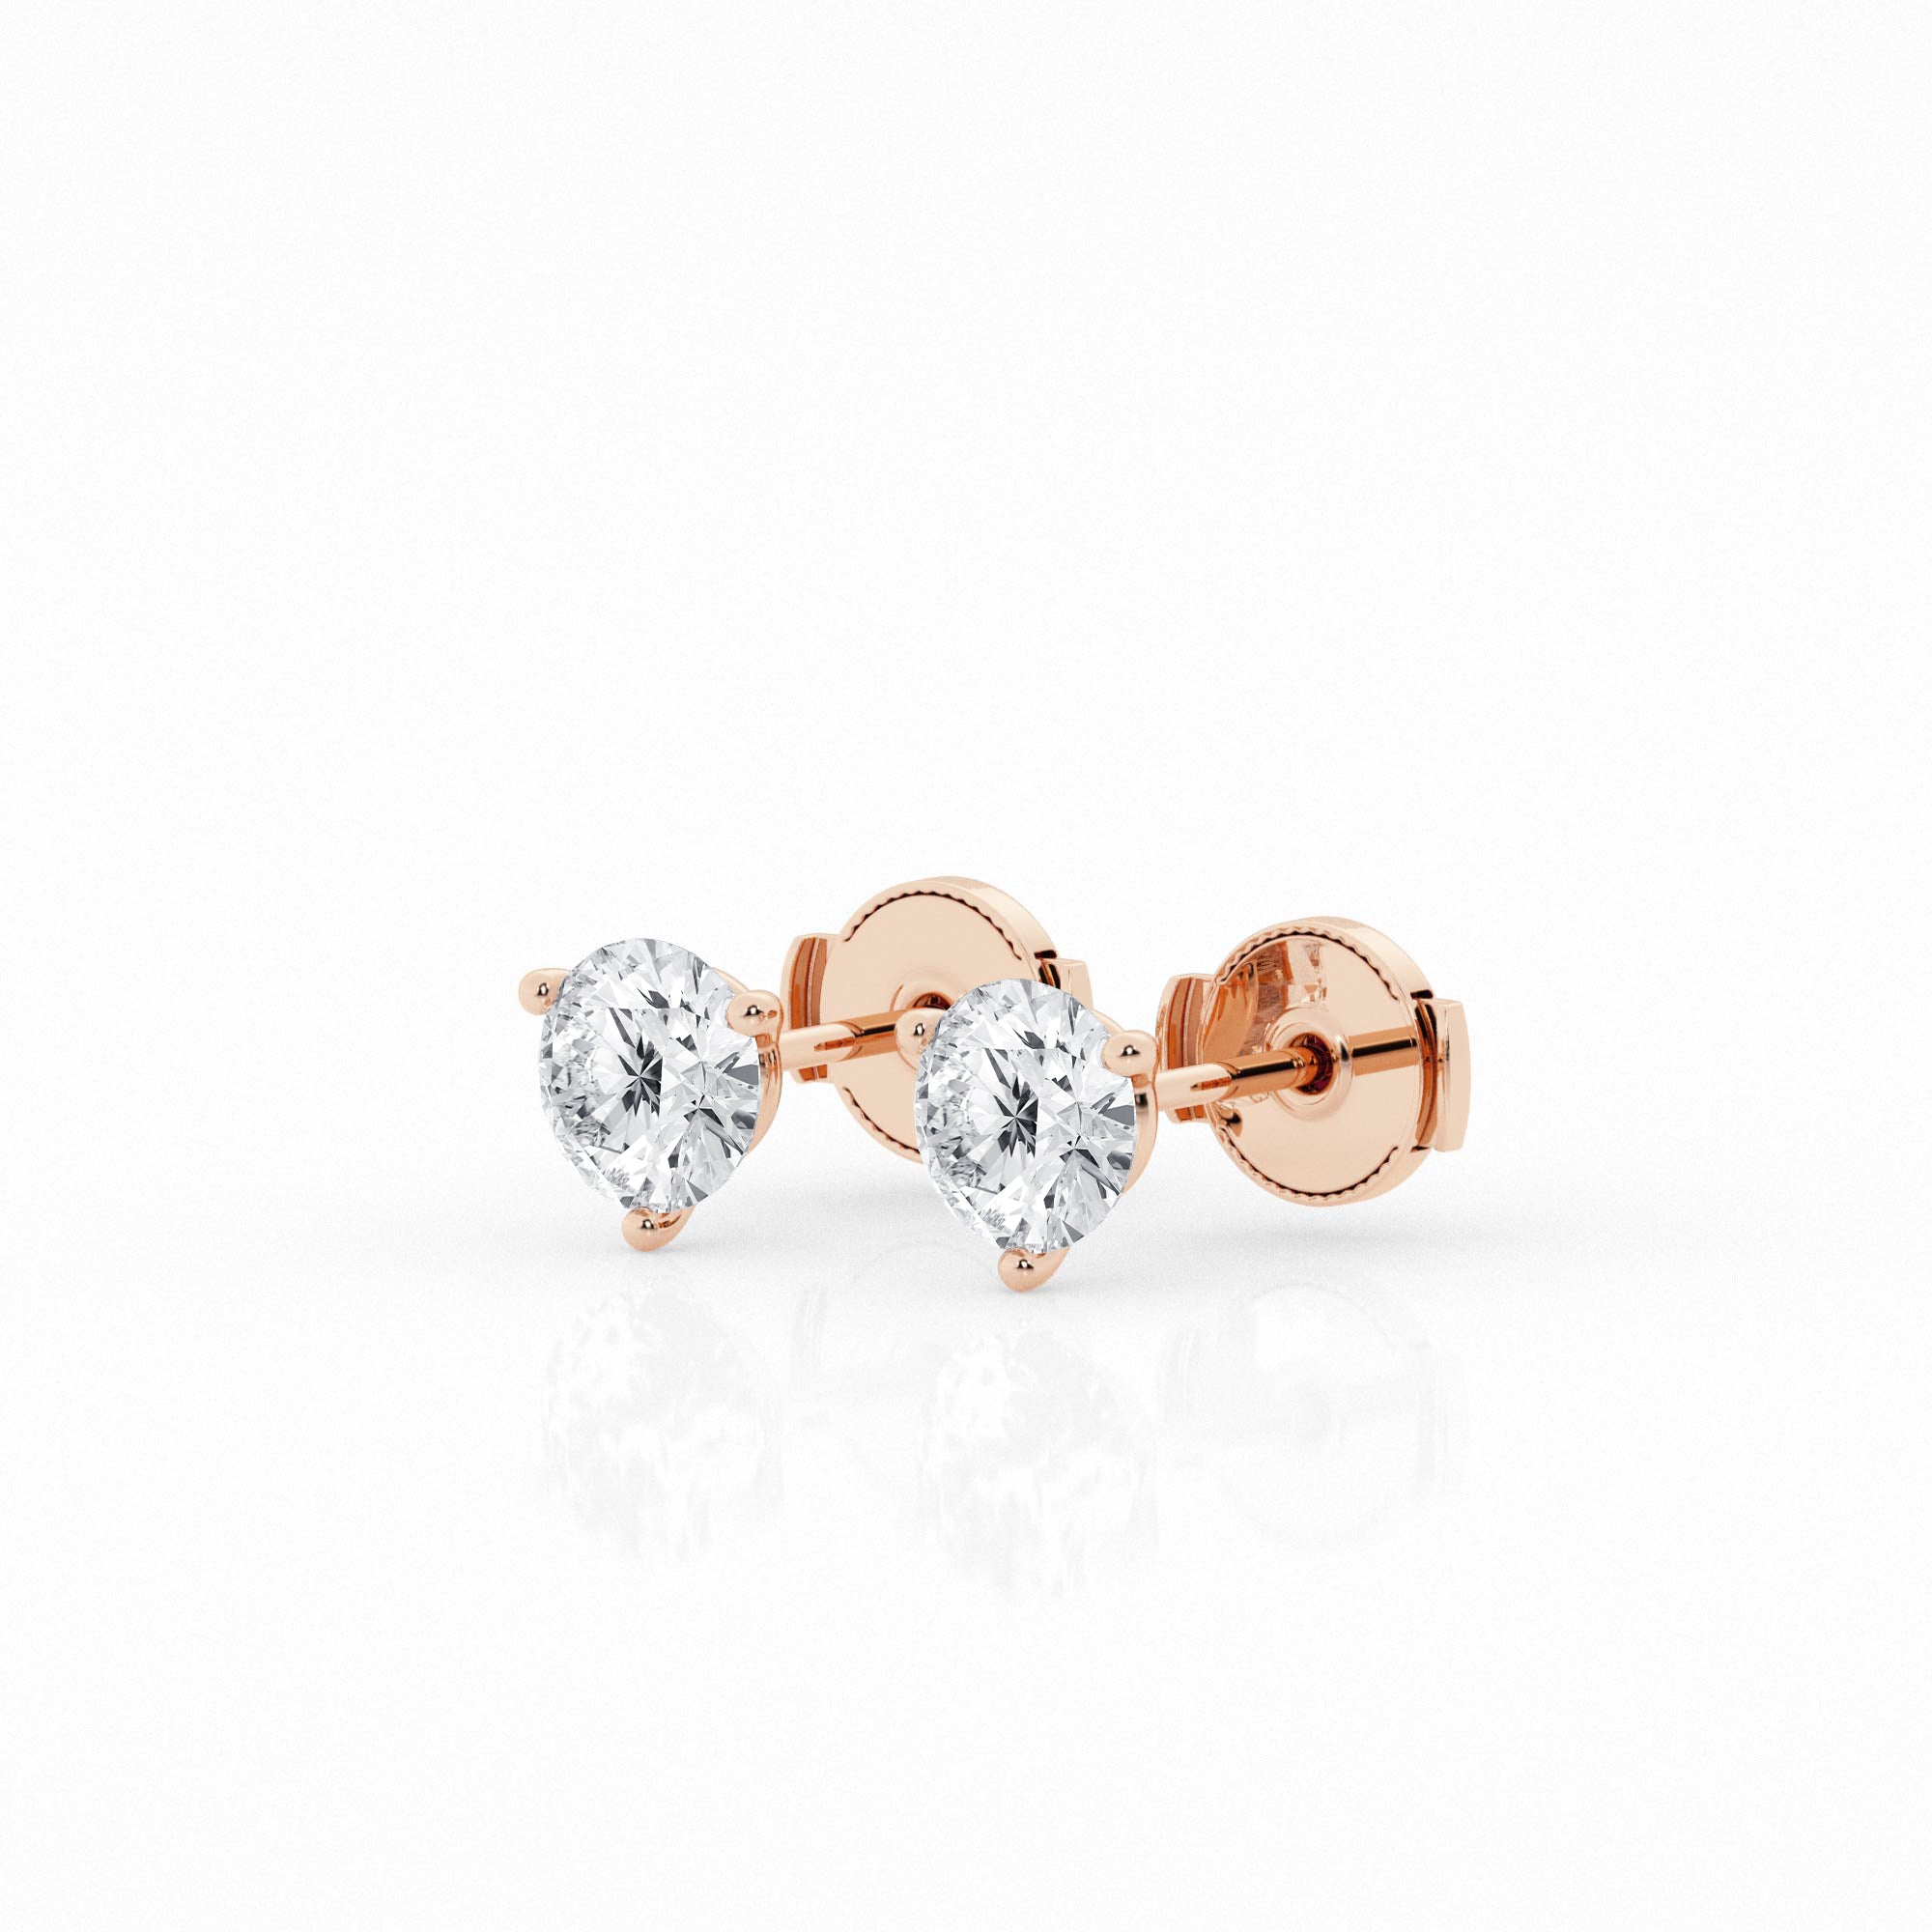 Rose gold stud earrings showcasing 1.5 carat lab-grown round diamonds, side view